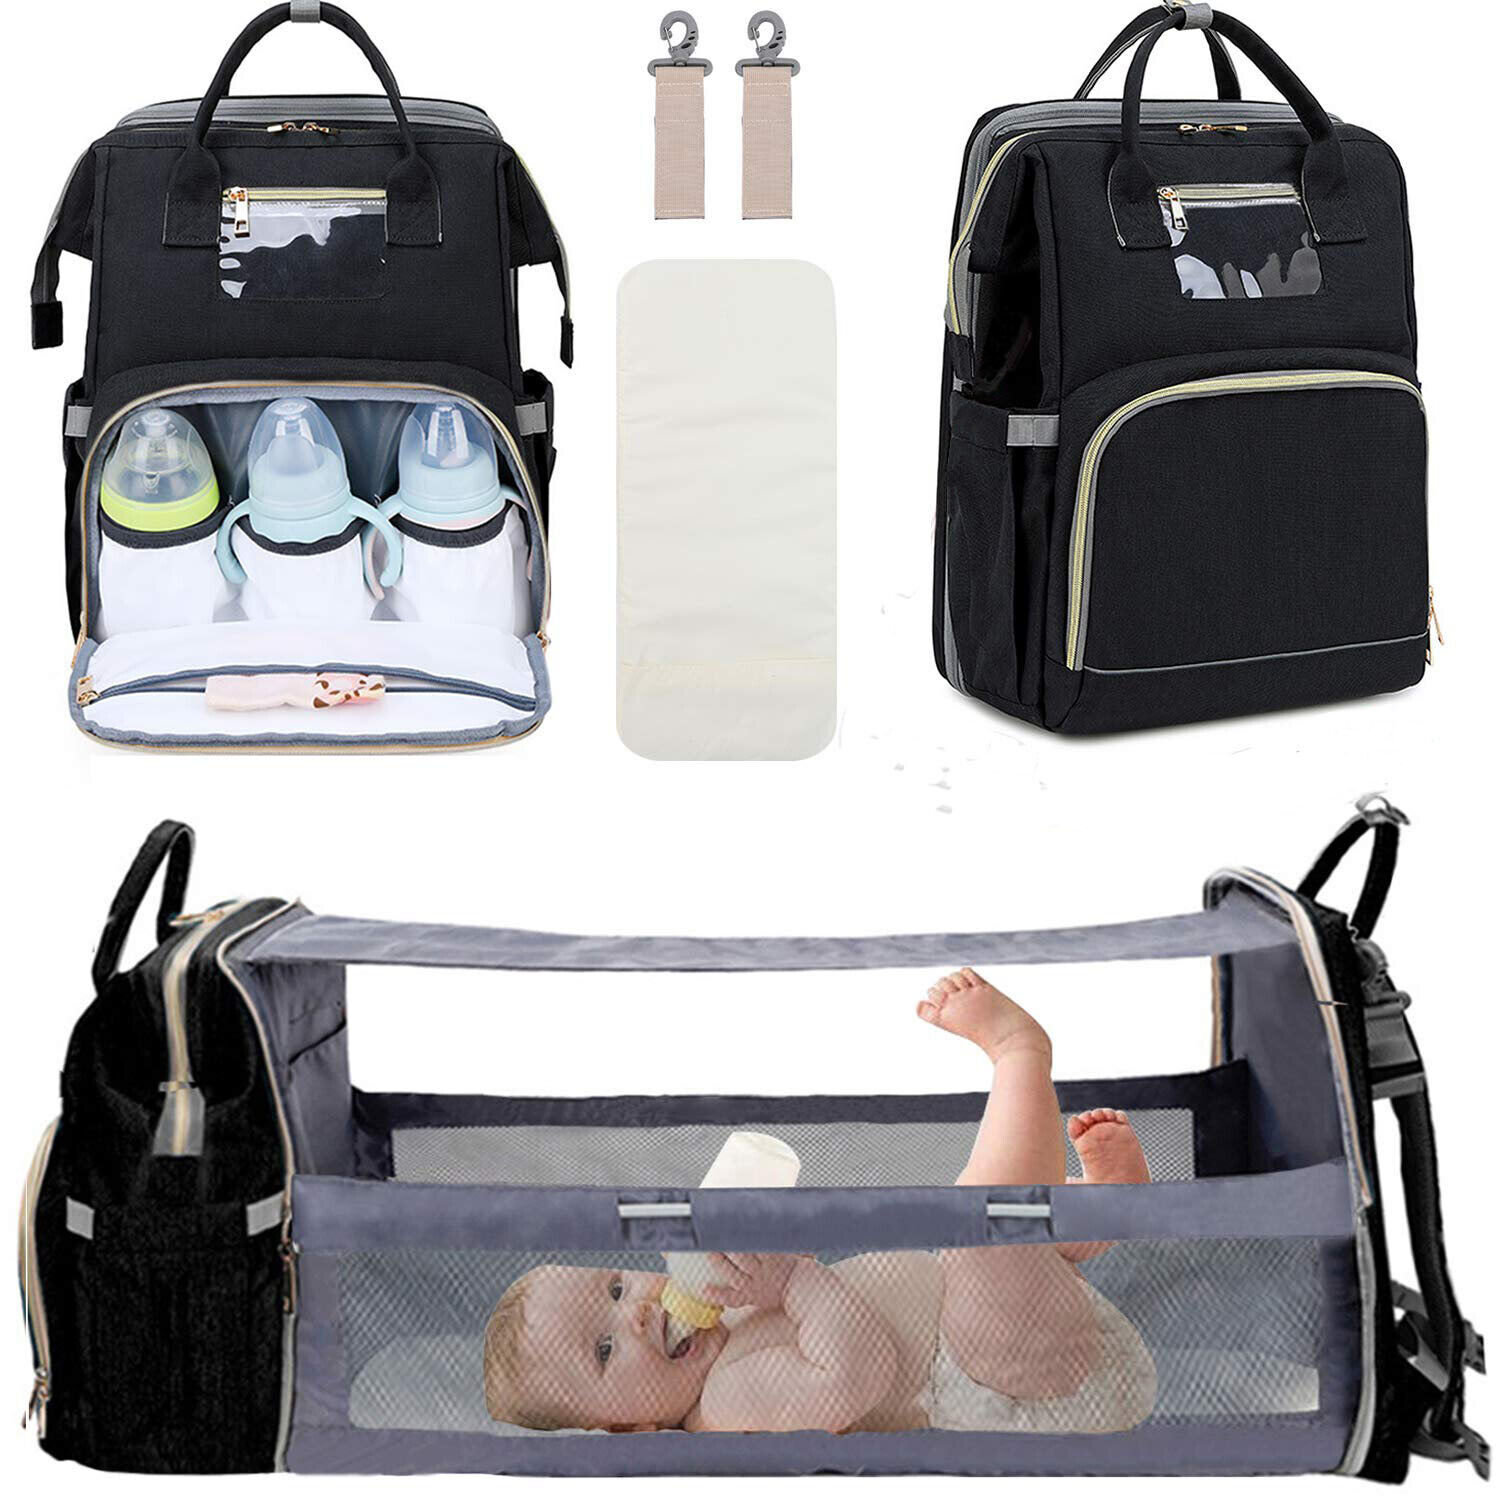 Ergo Queen Mummy Maternity Nappy Diaper Bag Large Capacity Baby Travel Backpack Ergo Queen